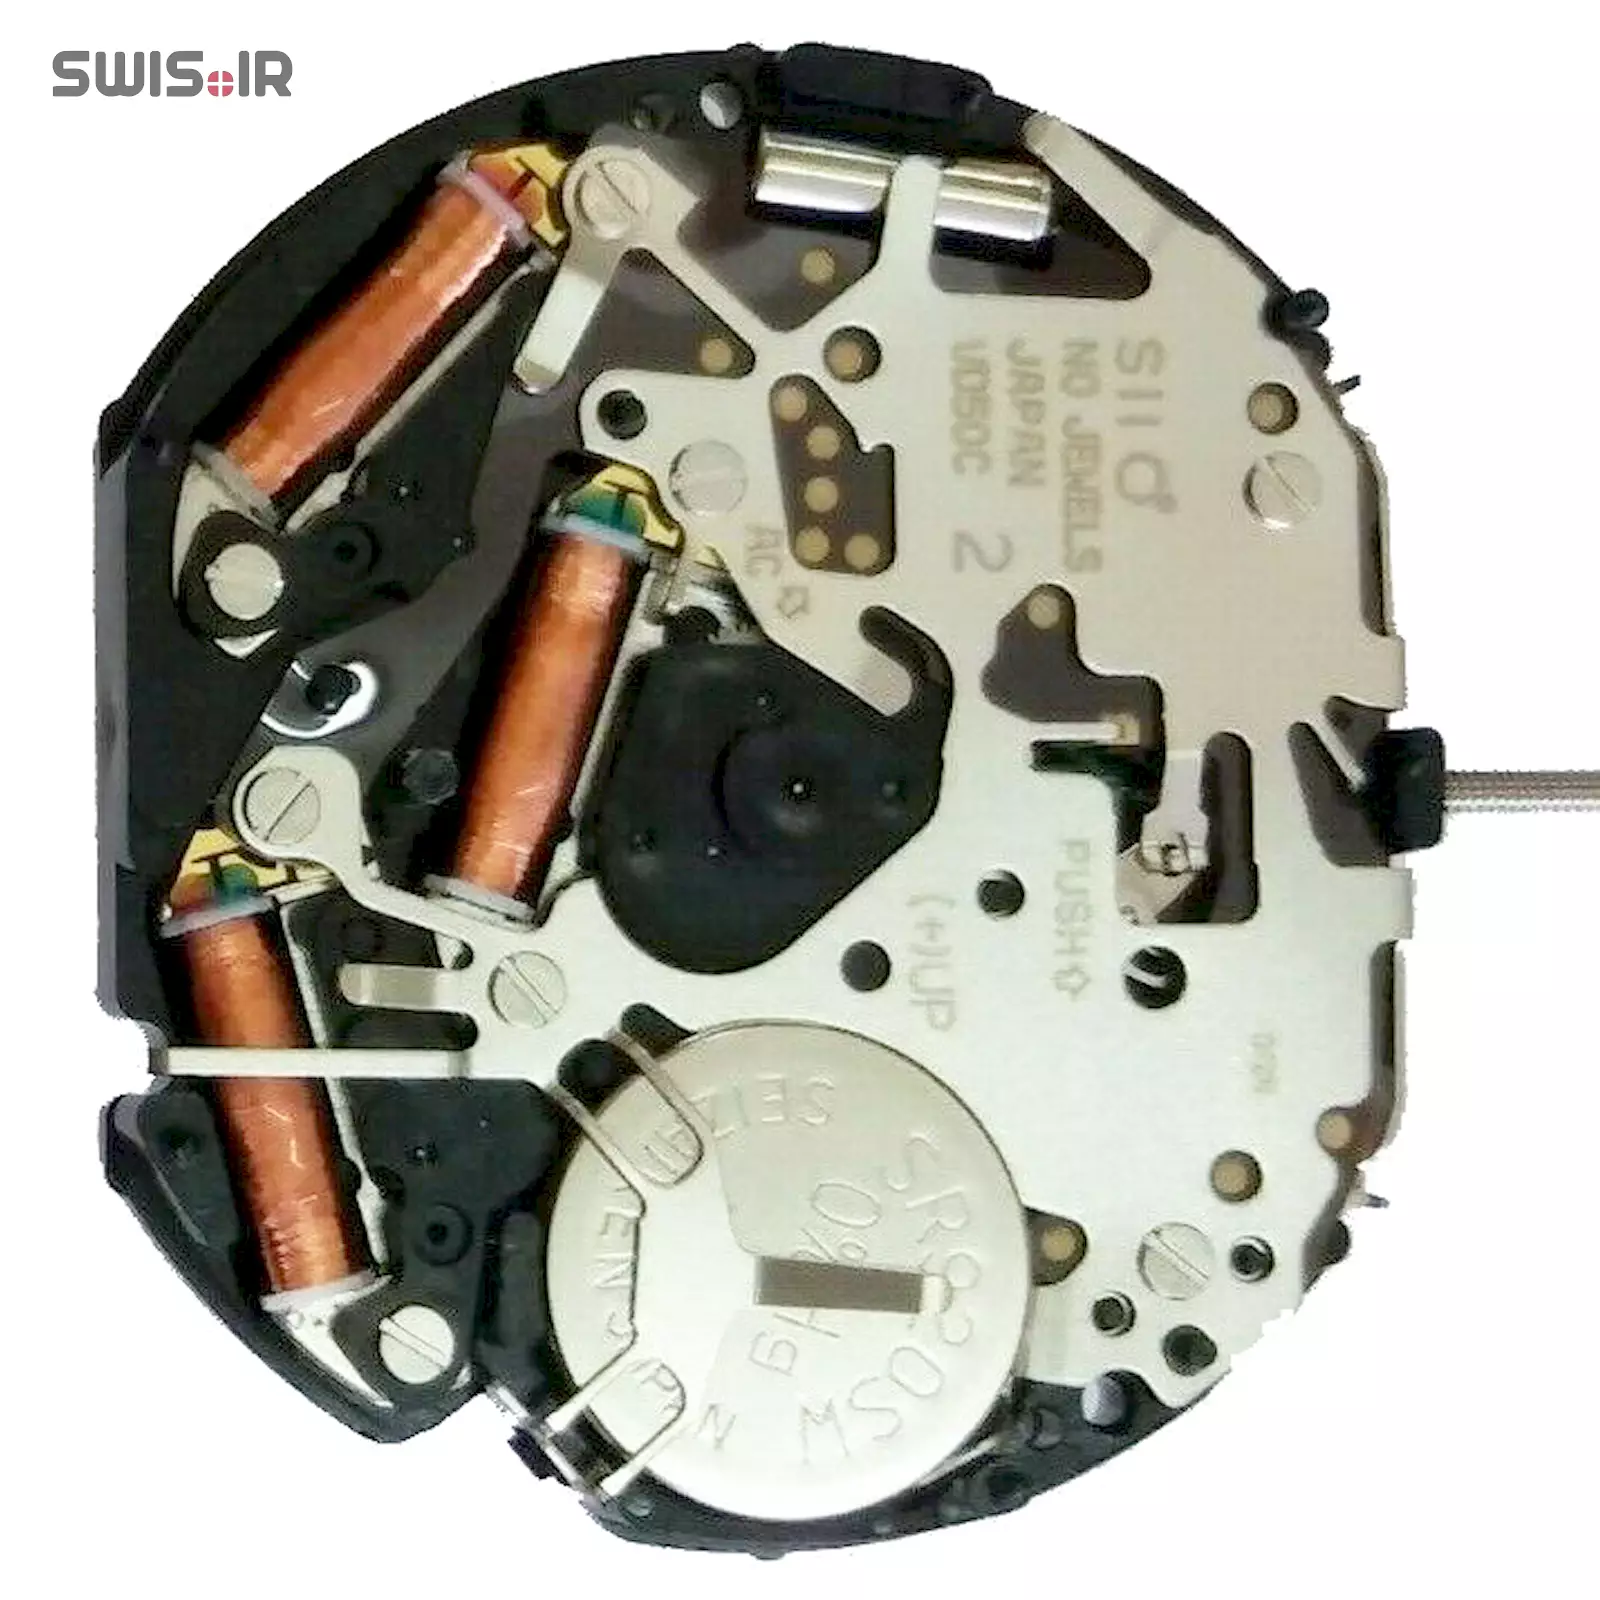 تصویر پشت موتور ساعت کالیبر VD50C ساخت شرکت سیکو ژاپن